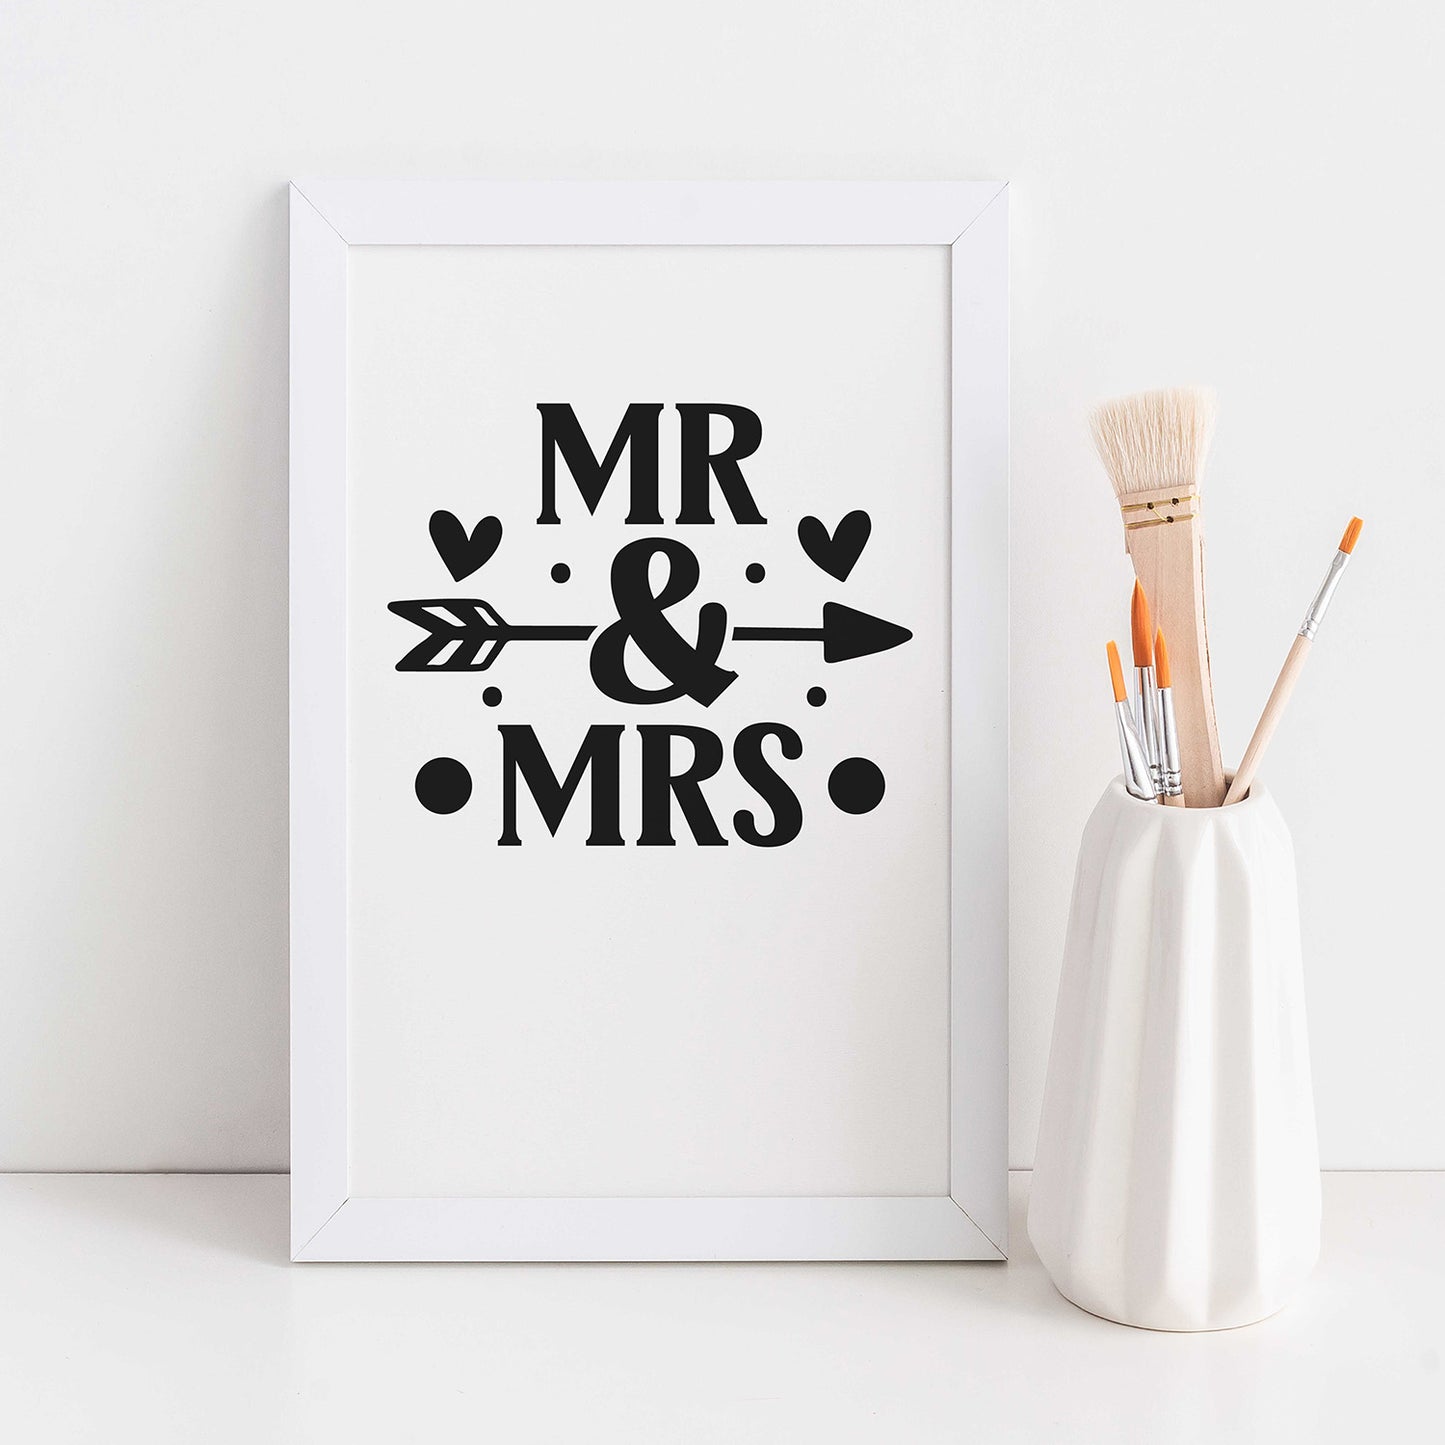 "Mr & Mrs" Graphic